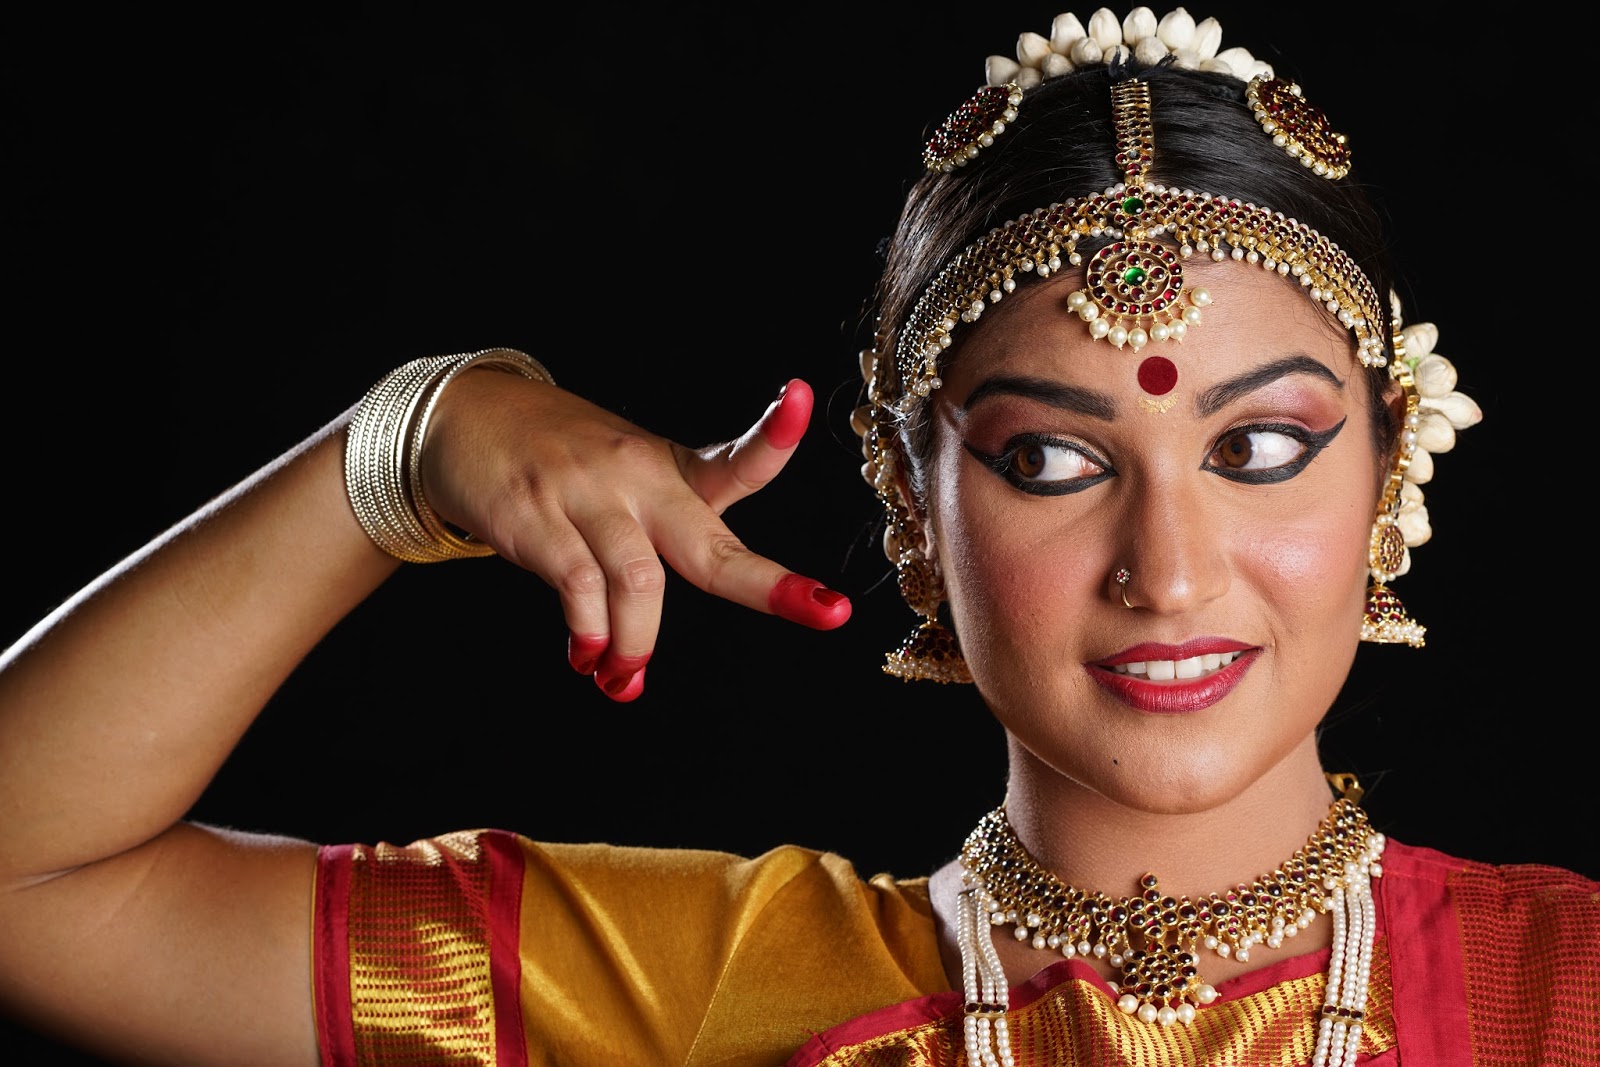 Roja Kannan & Parashah : MADURAI CHITHIRAI TIRUVIZHA - Natya Dance Theatre